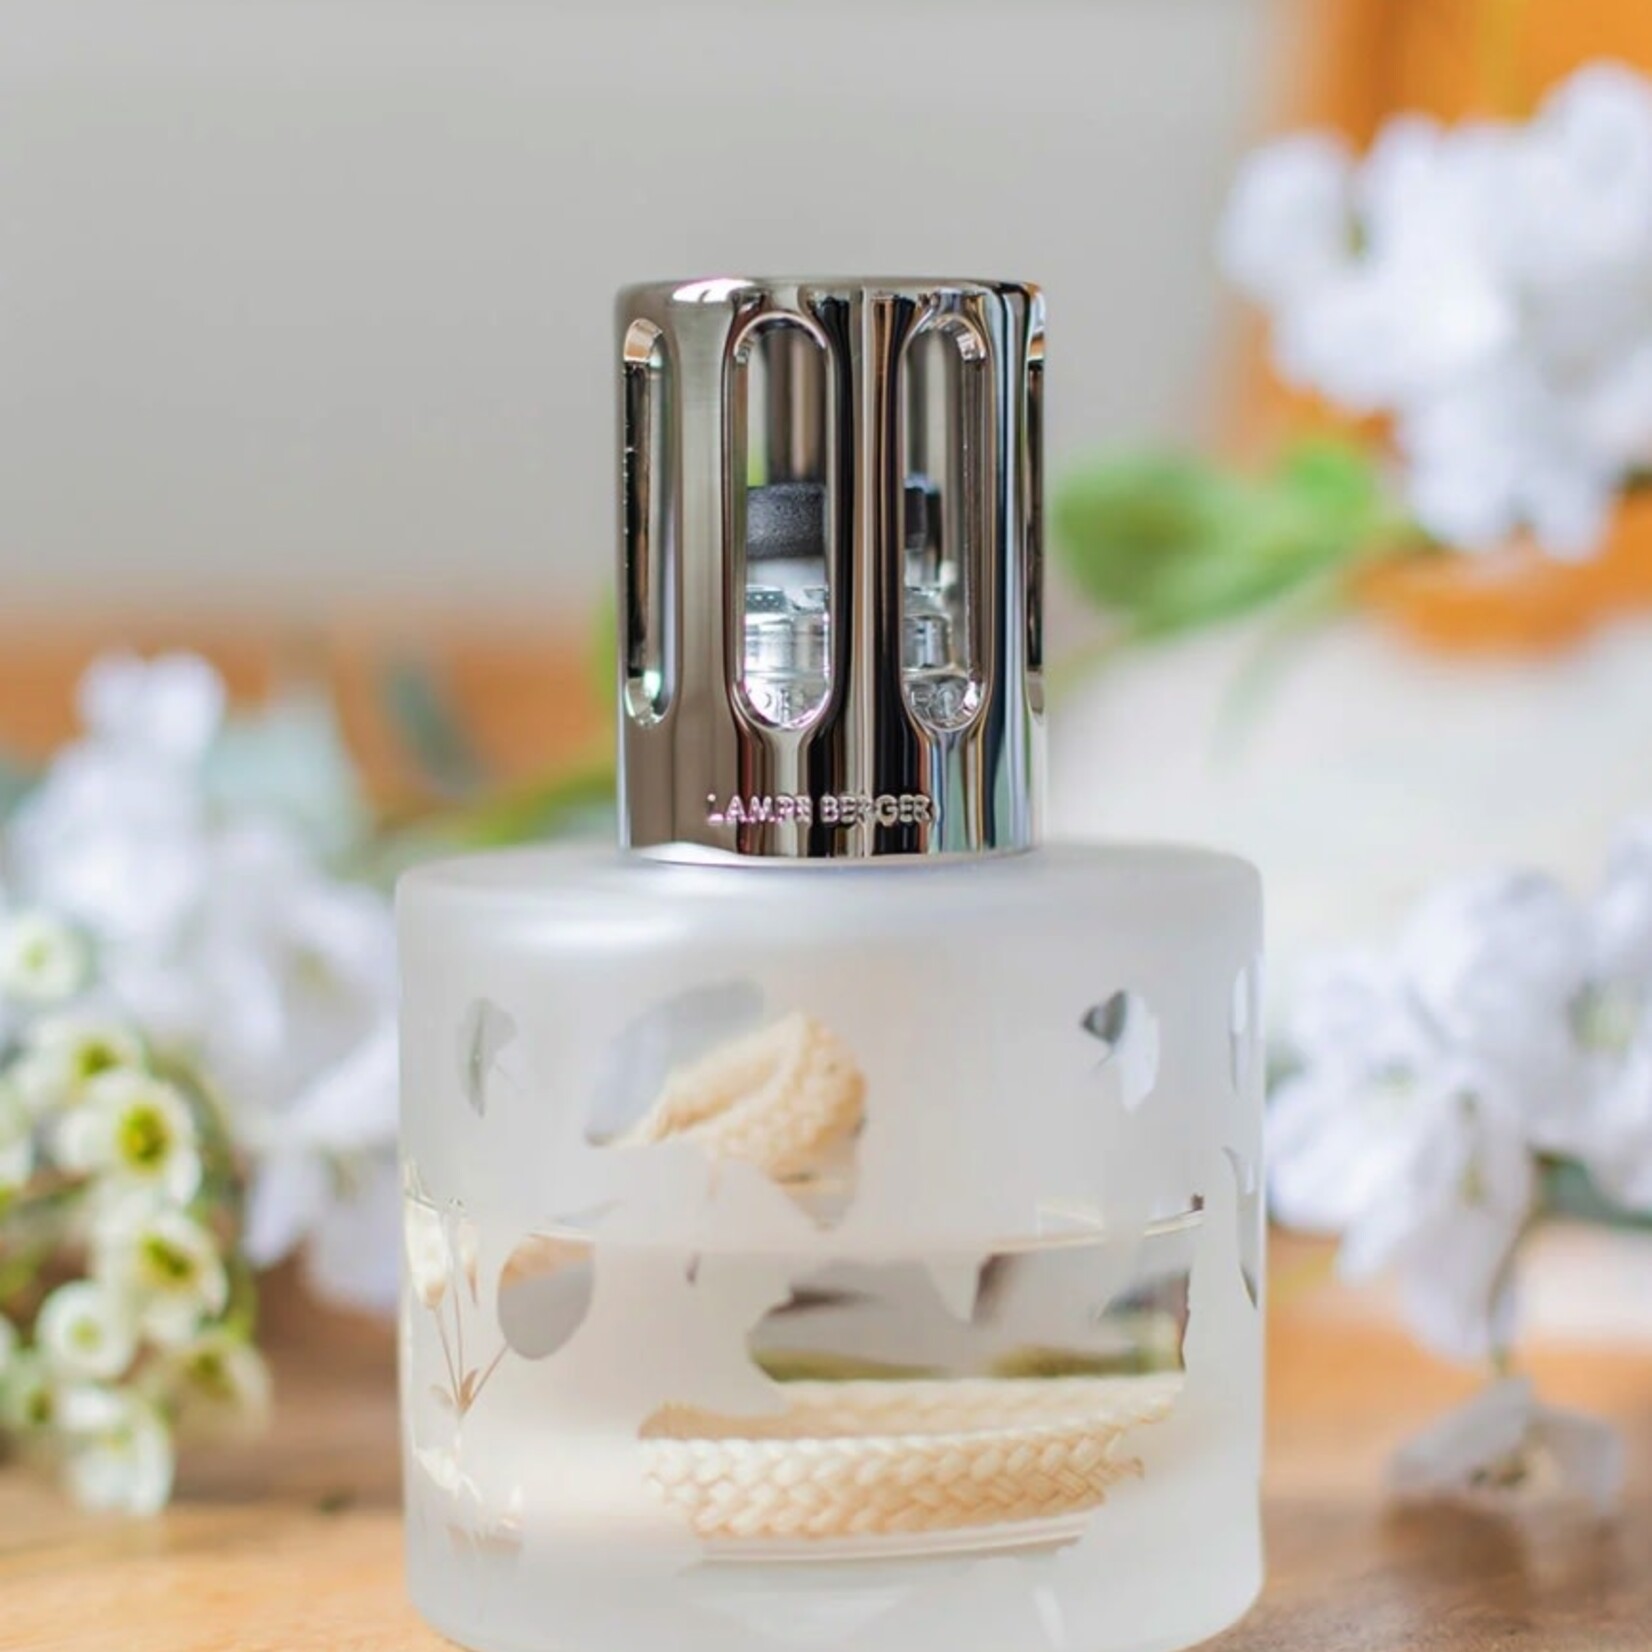 Maison Berger Paris Lamp Gift Set - Aquatic Freshness - Aroma Happy